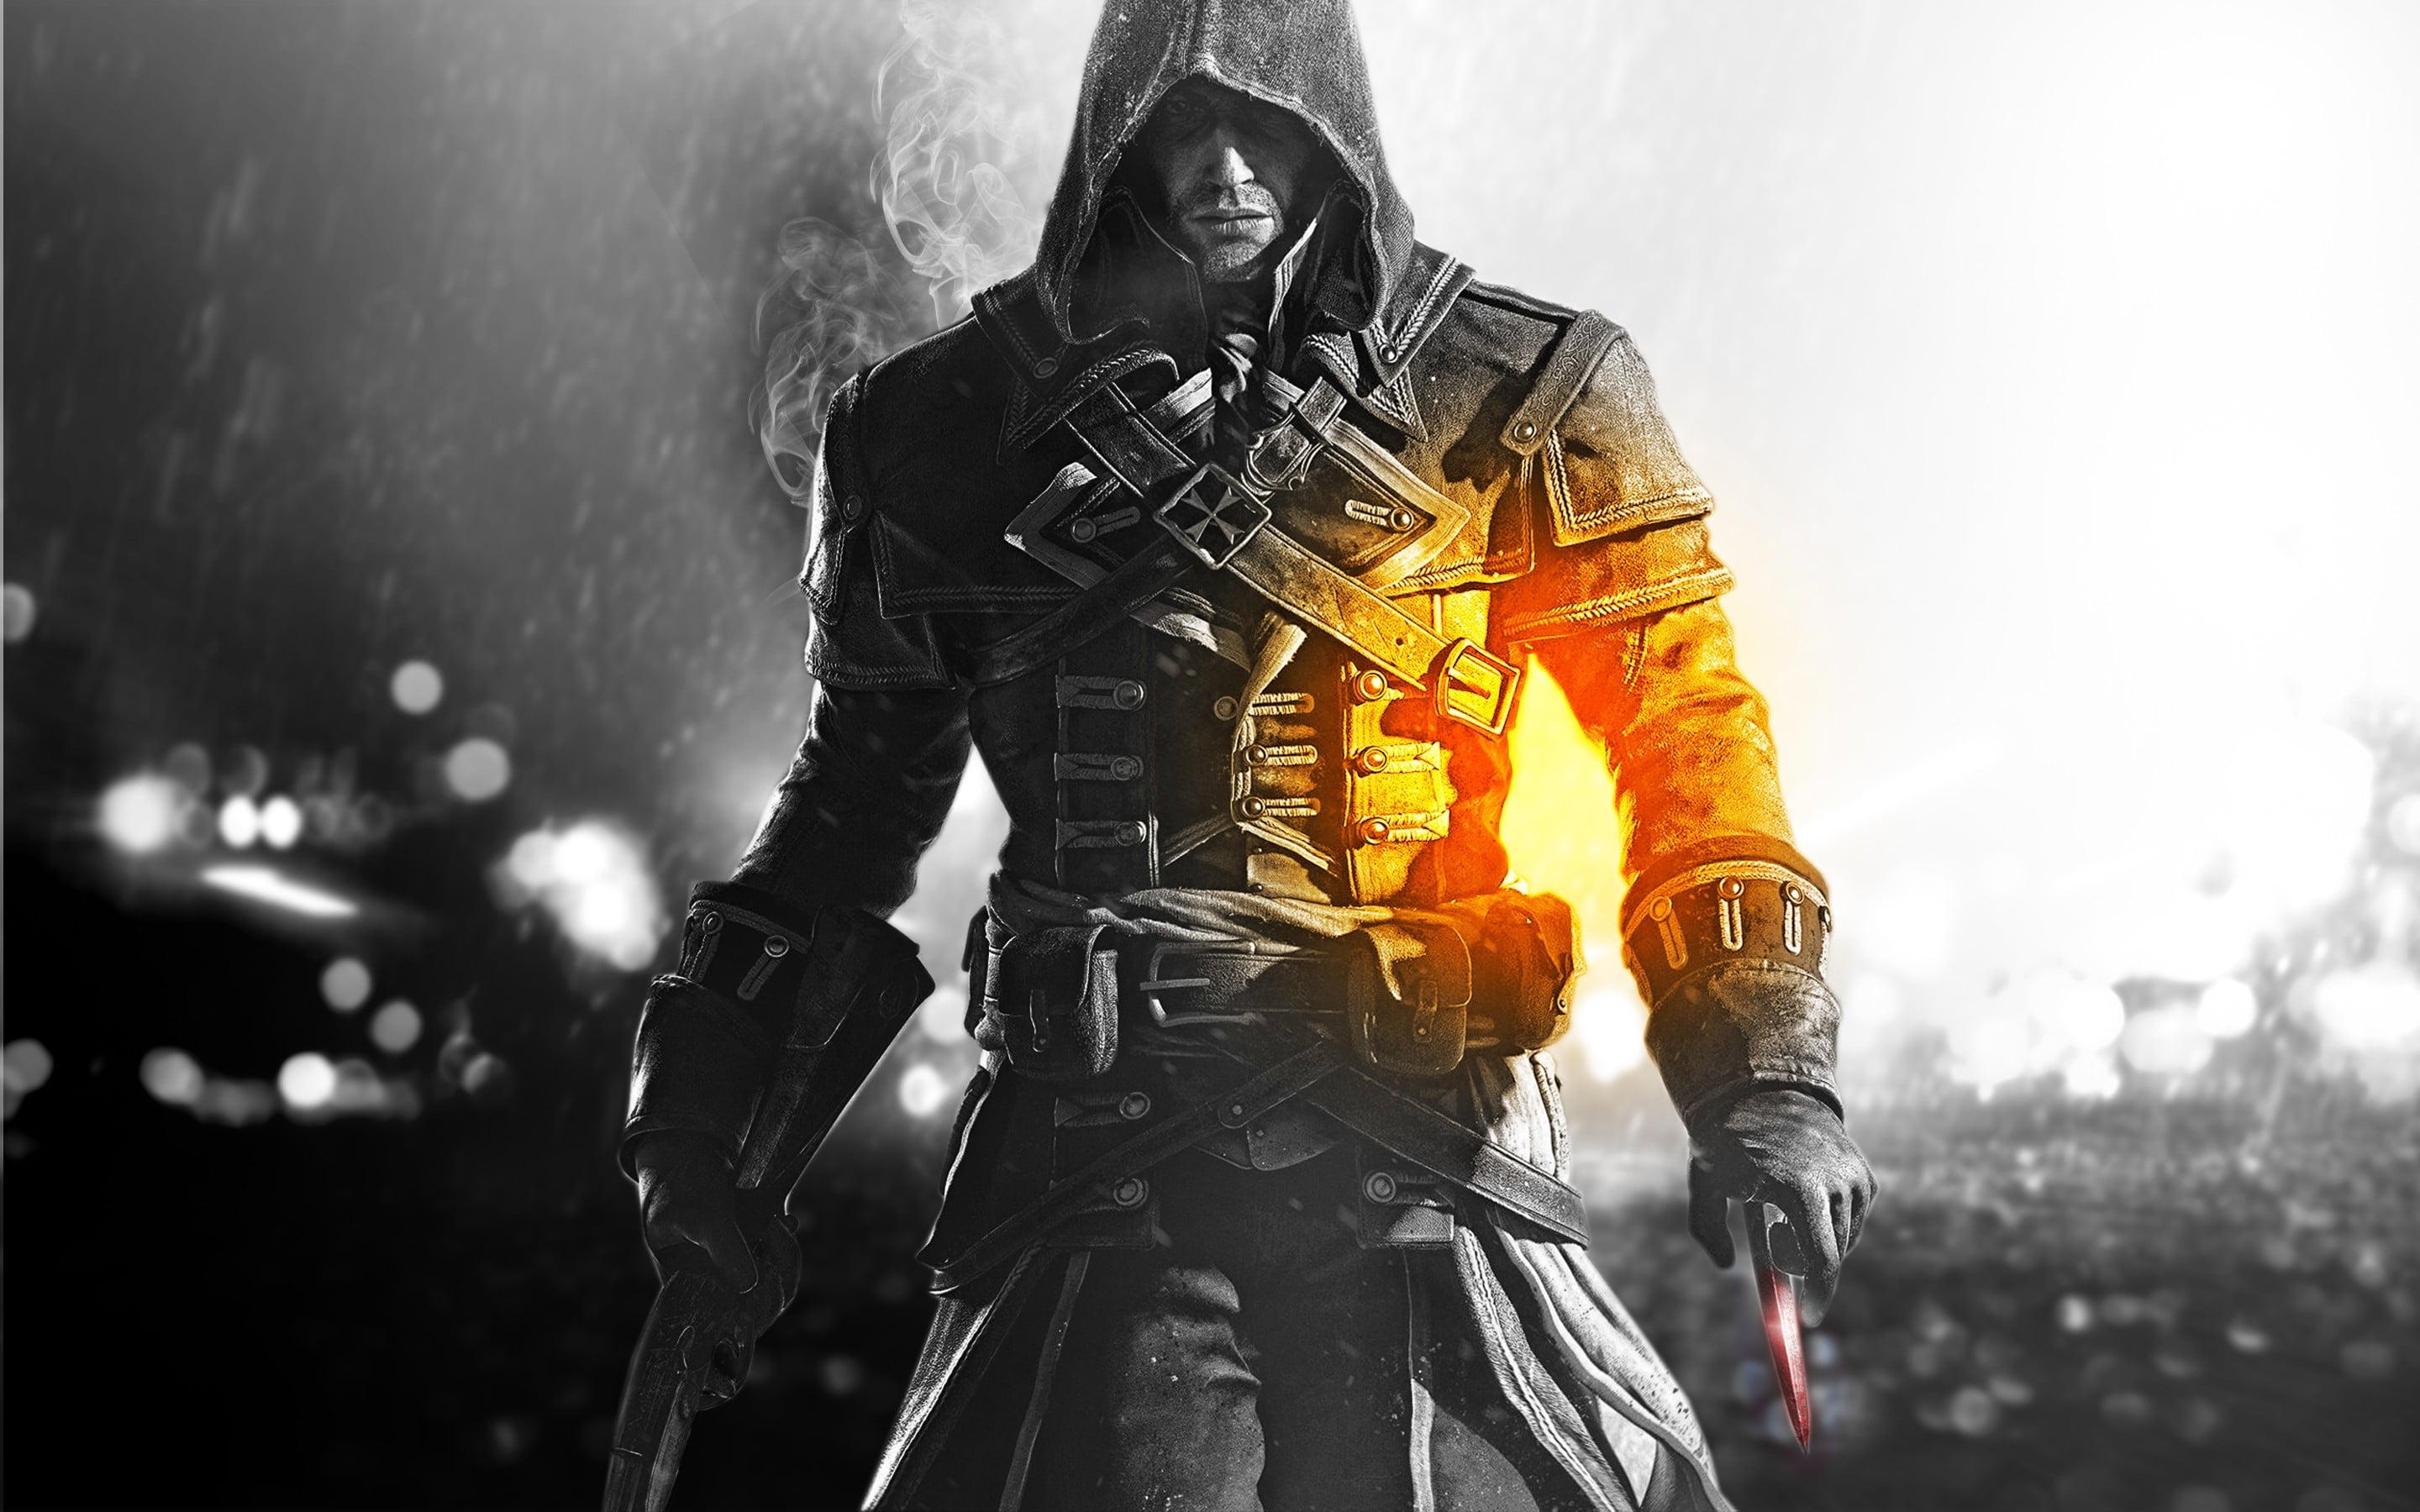 Assassin's Creed digital wallpaper, Assassin's Creed Rogue